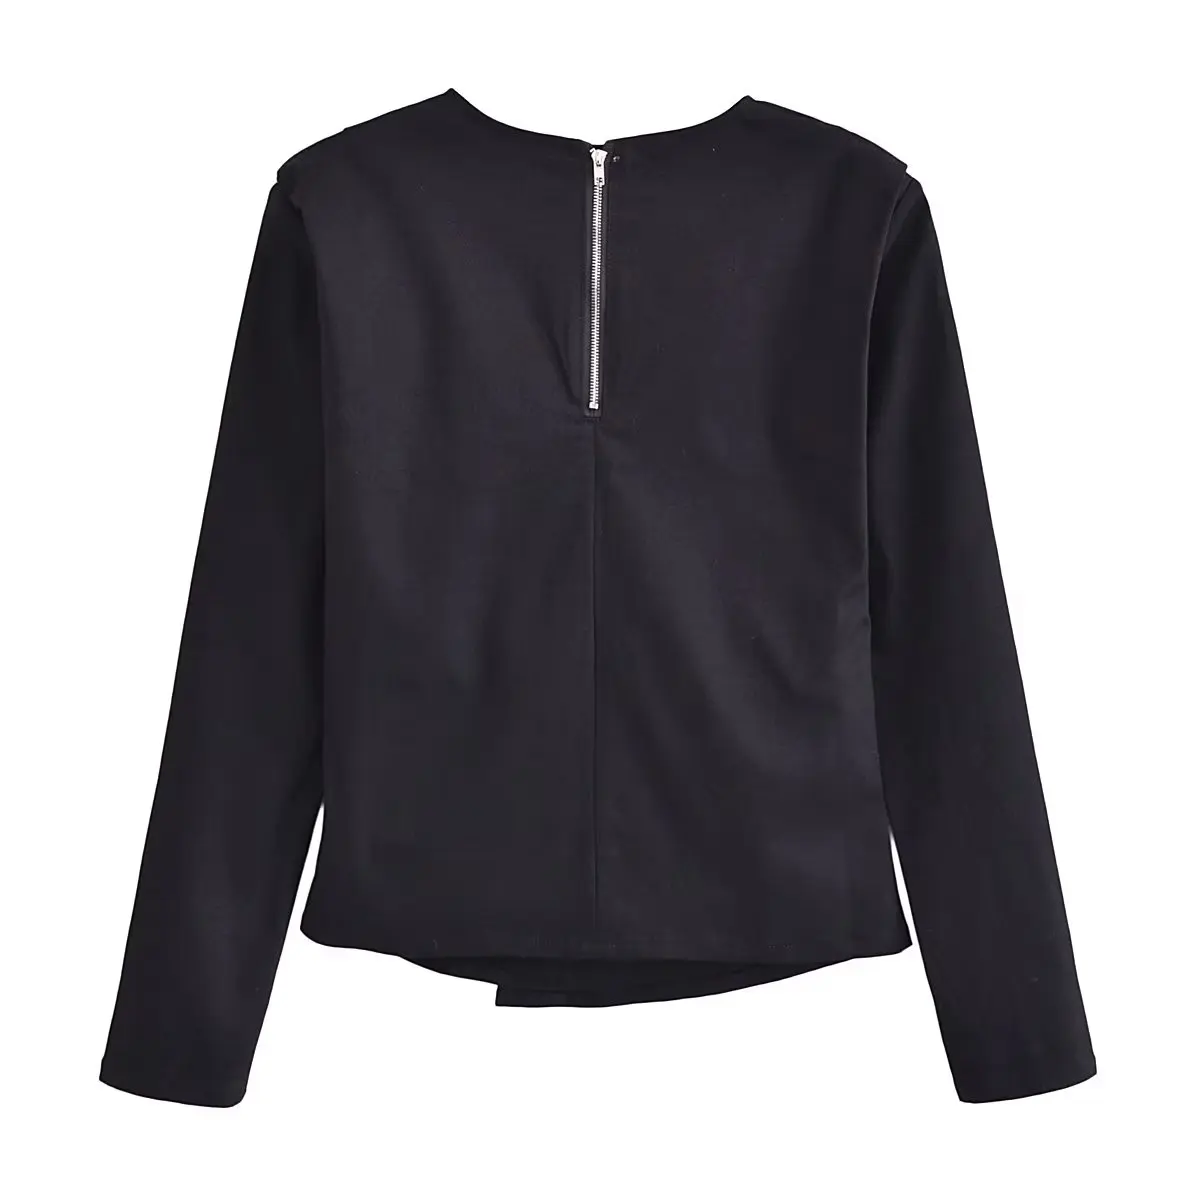 Maxdutti French Women's Retro Patchwork  Blouse Women Design Shirt Casual And Elegant Black Shirt Autumn Tops